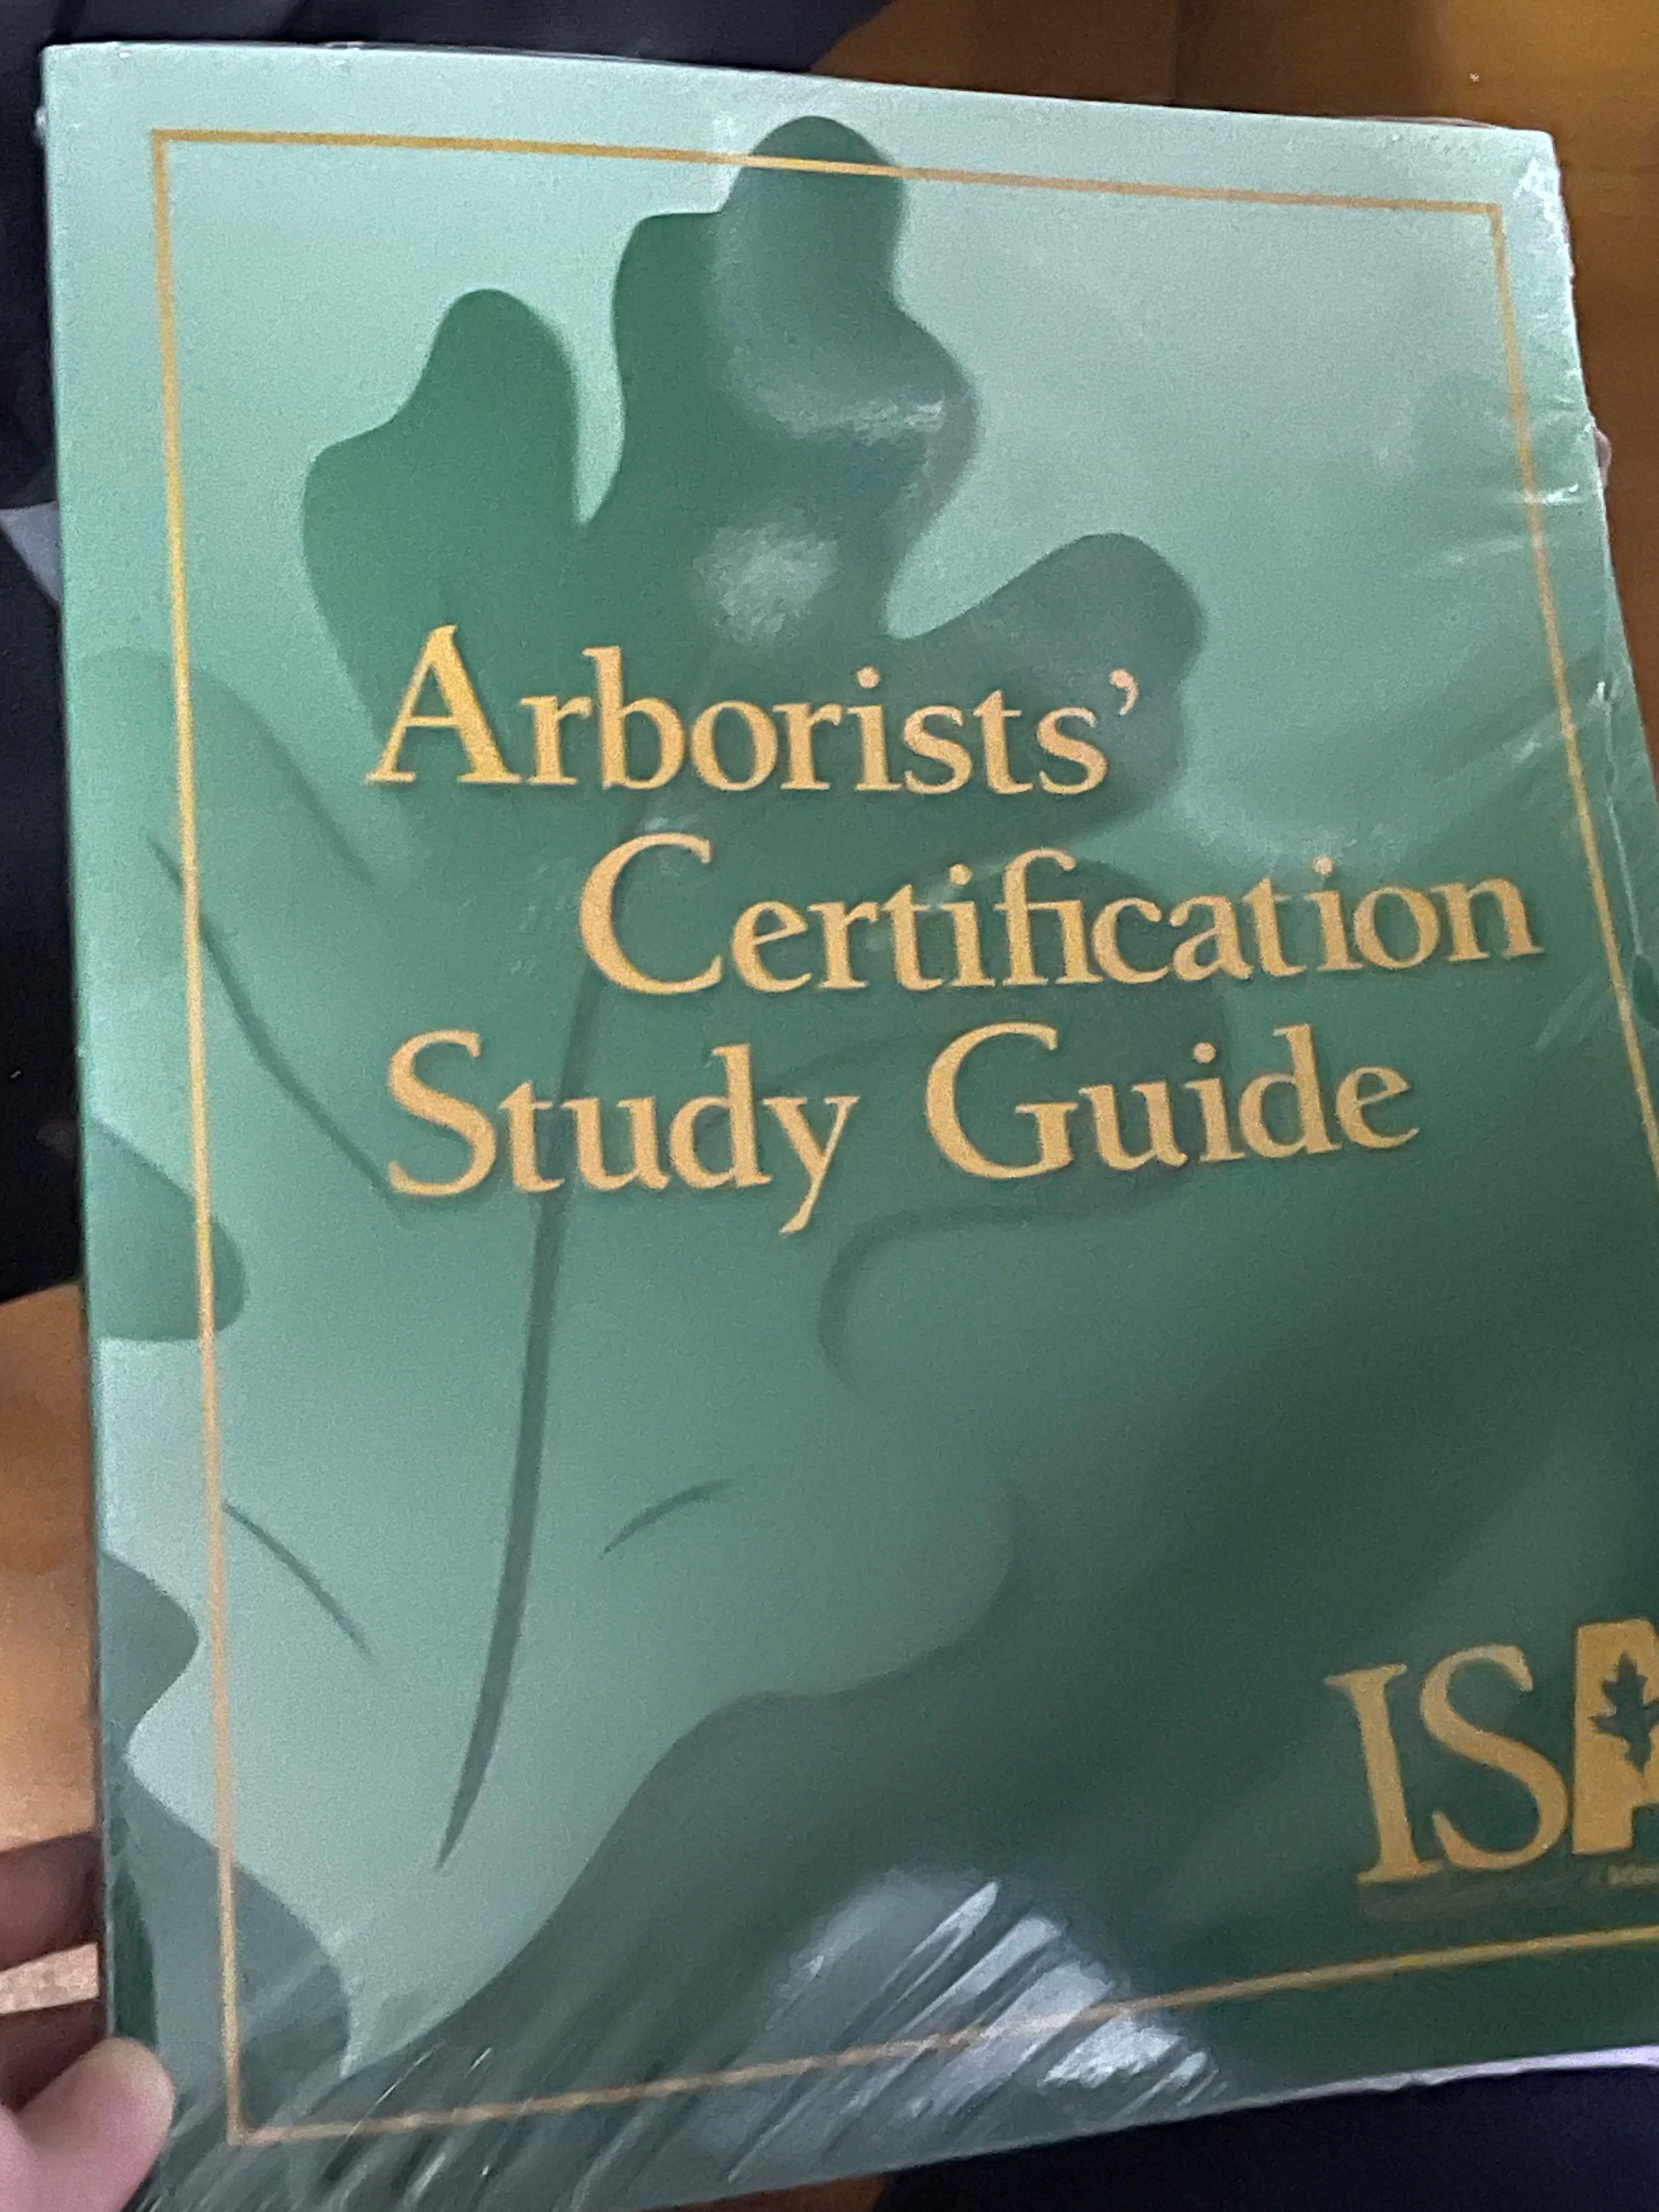 Arborists’ Certification Study Guide